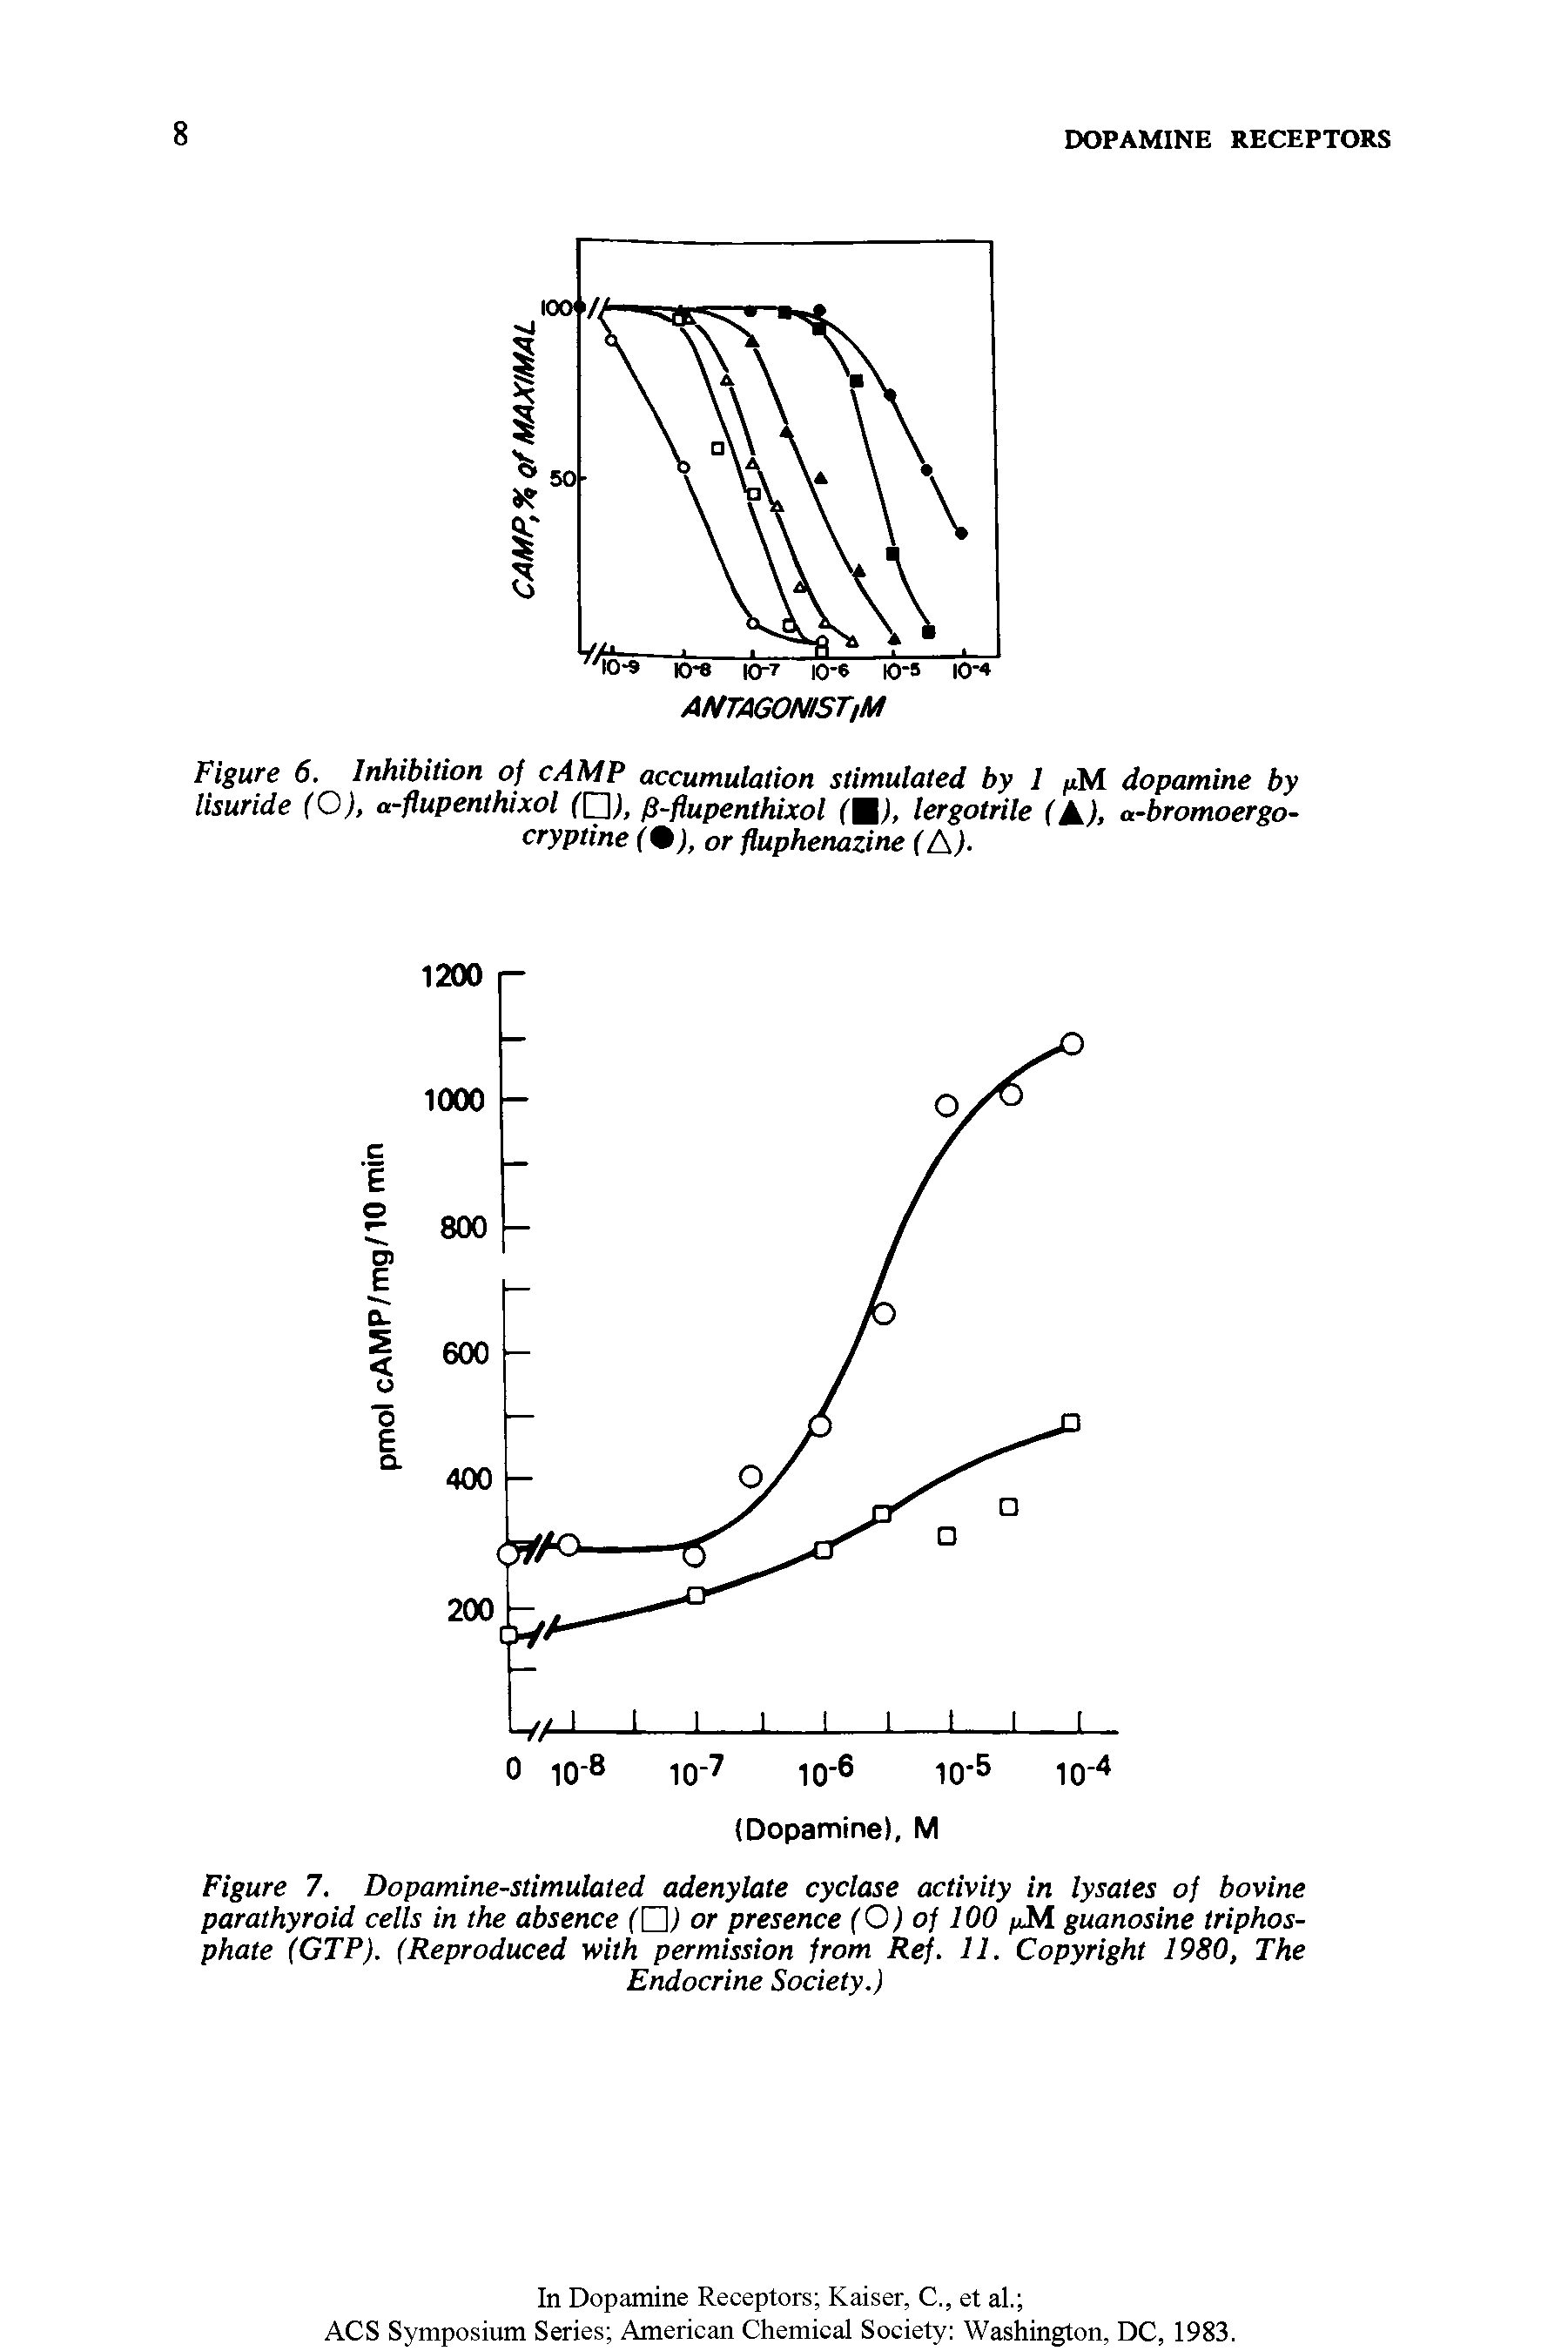 Figure 6. Inhibition of cAMP accumulation stimulated by 1 pM dopamine by lisuride (O), a-flupenthixol ( ,), fl-flupenthixol (M)> lergotrile (A), a-bromoergo-cryptine (%), or fluphenazine (A).